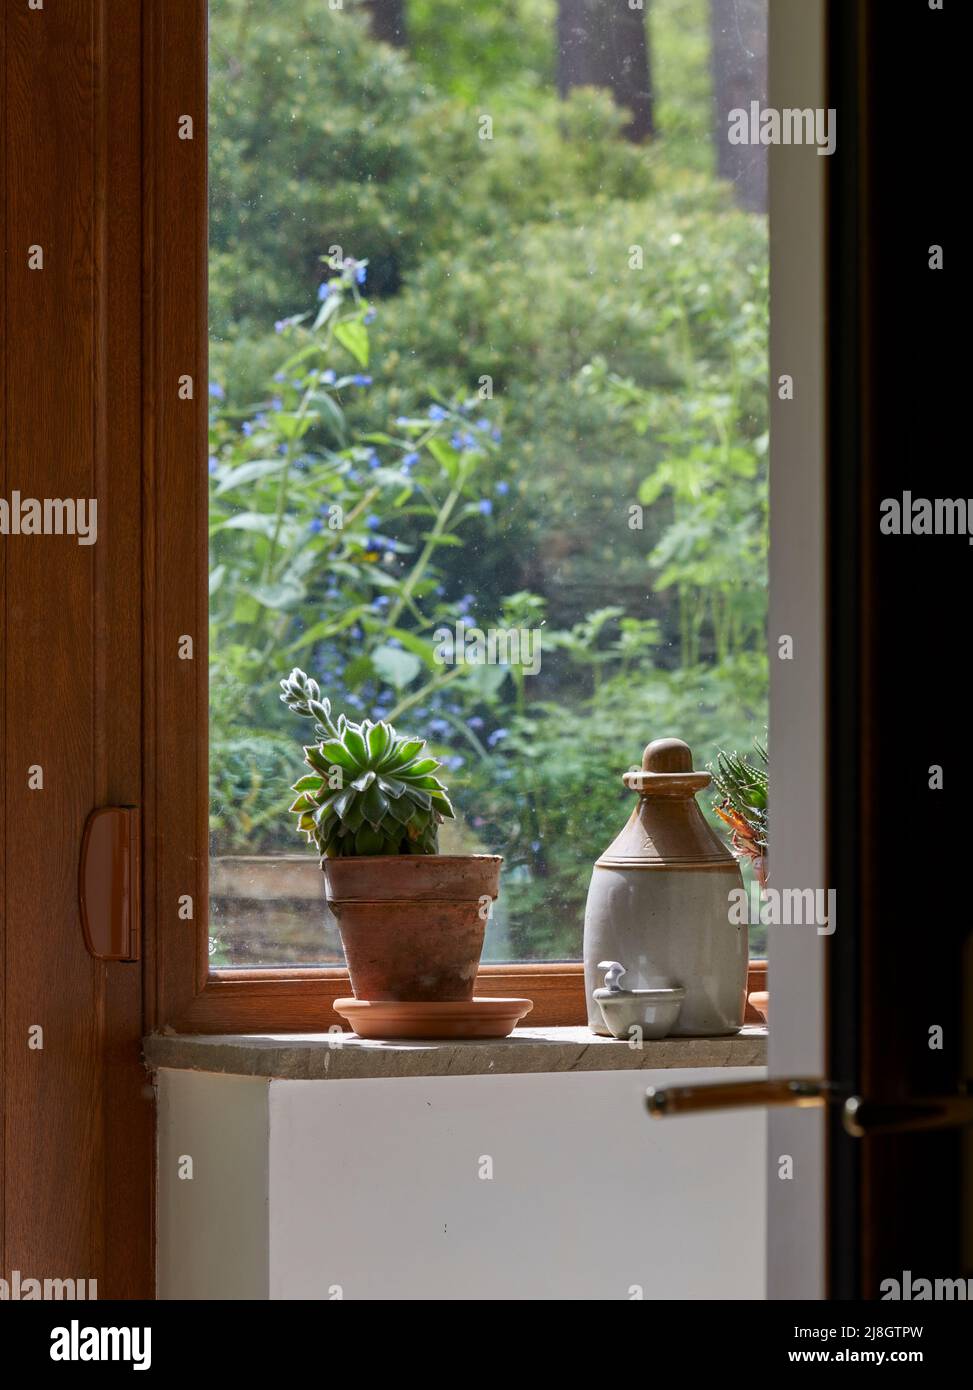 House plant and jar on porch windowsill Stock Photo